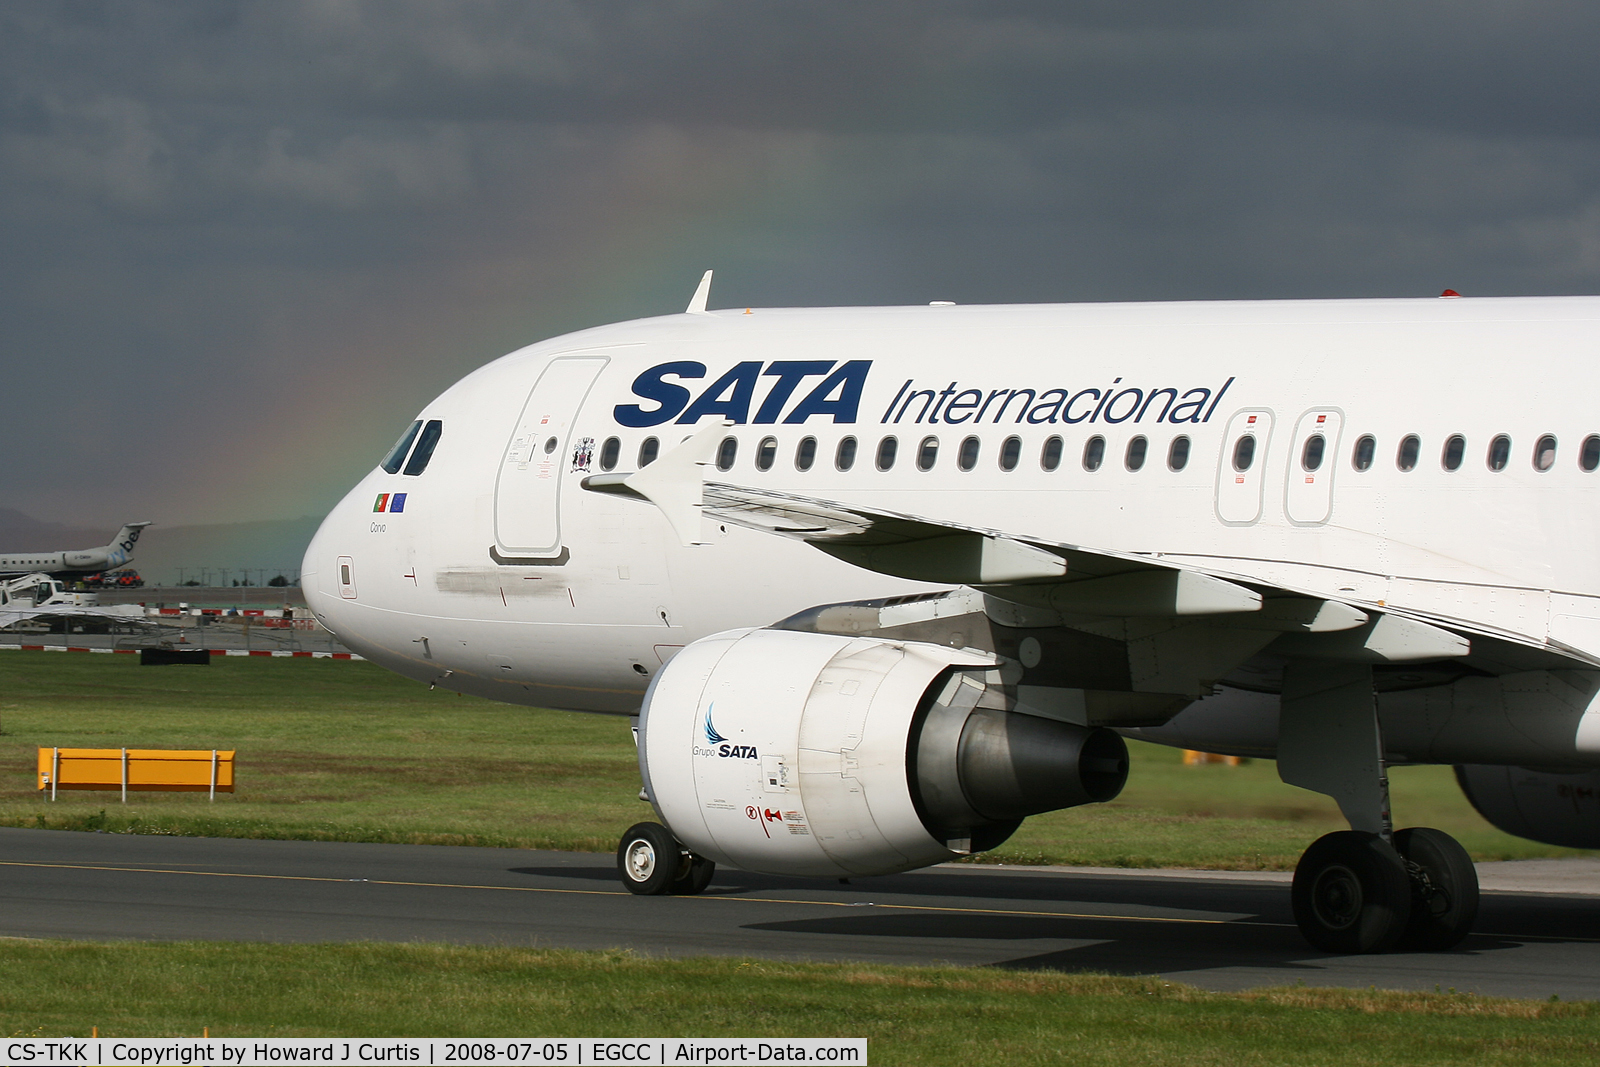 CS-TKK, 2005 Airbus A320-214 C/N 2390, SATA Internacional (with rainbow over the nose).